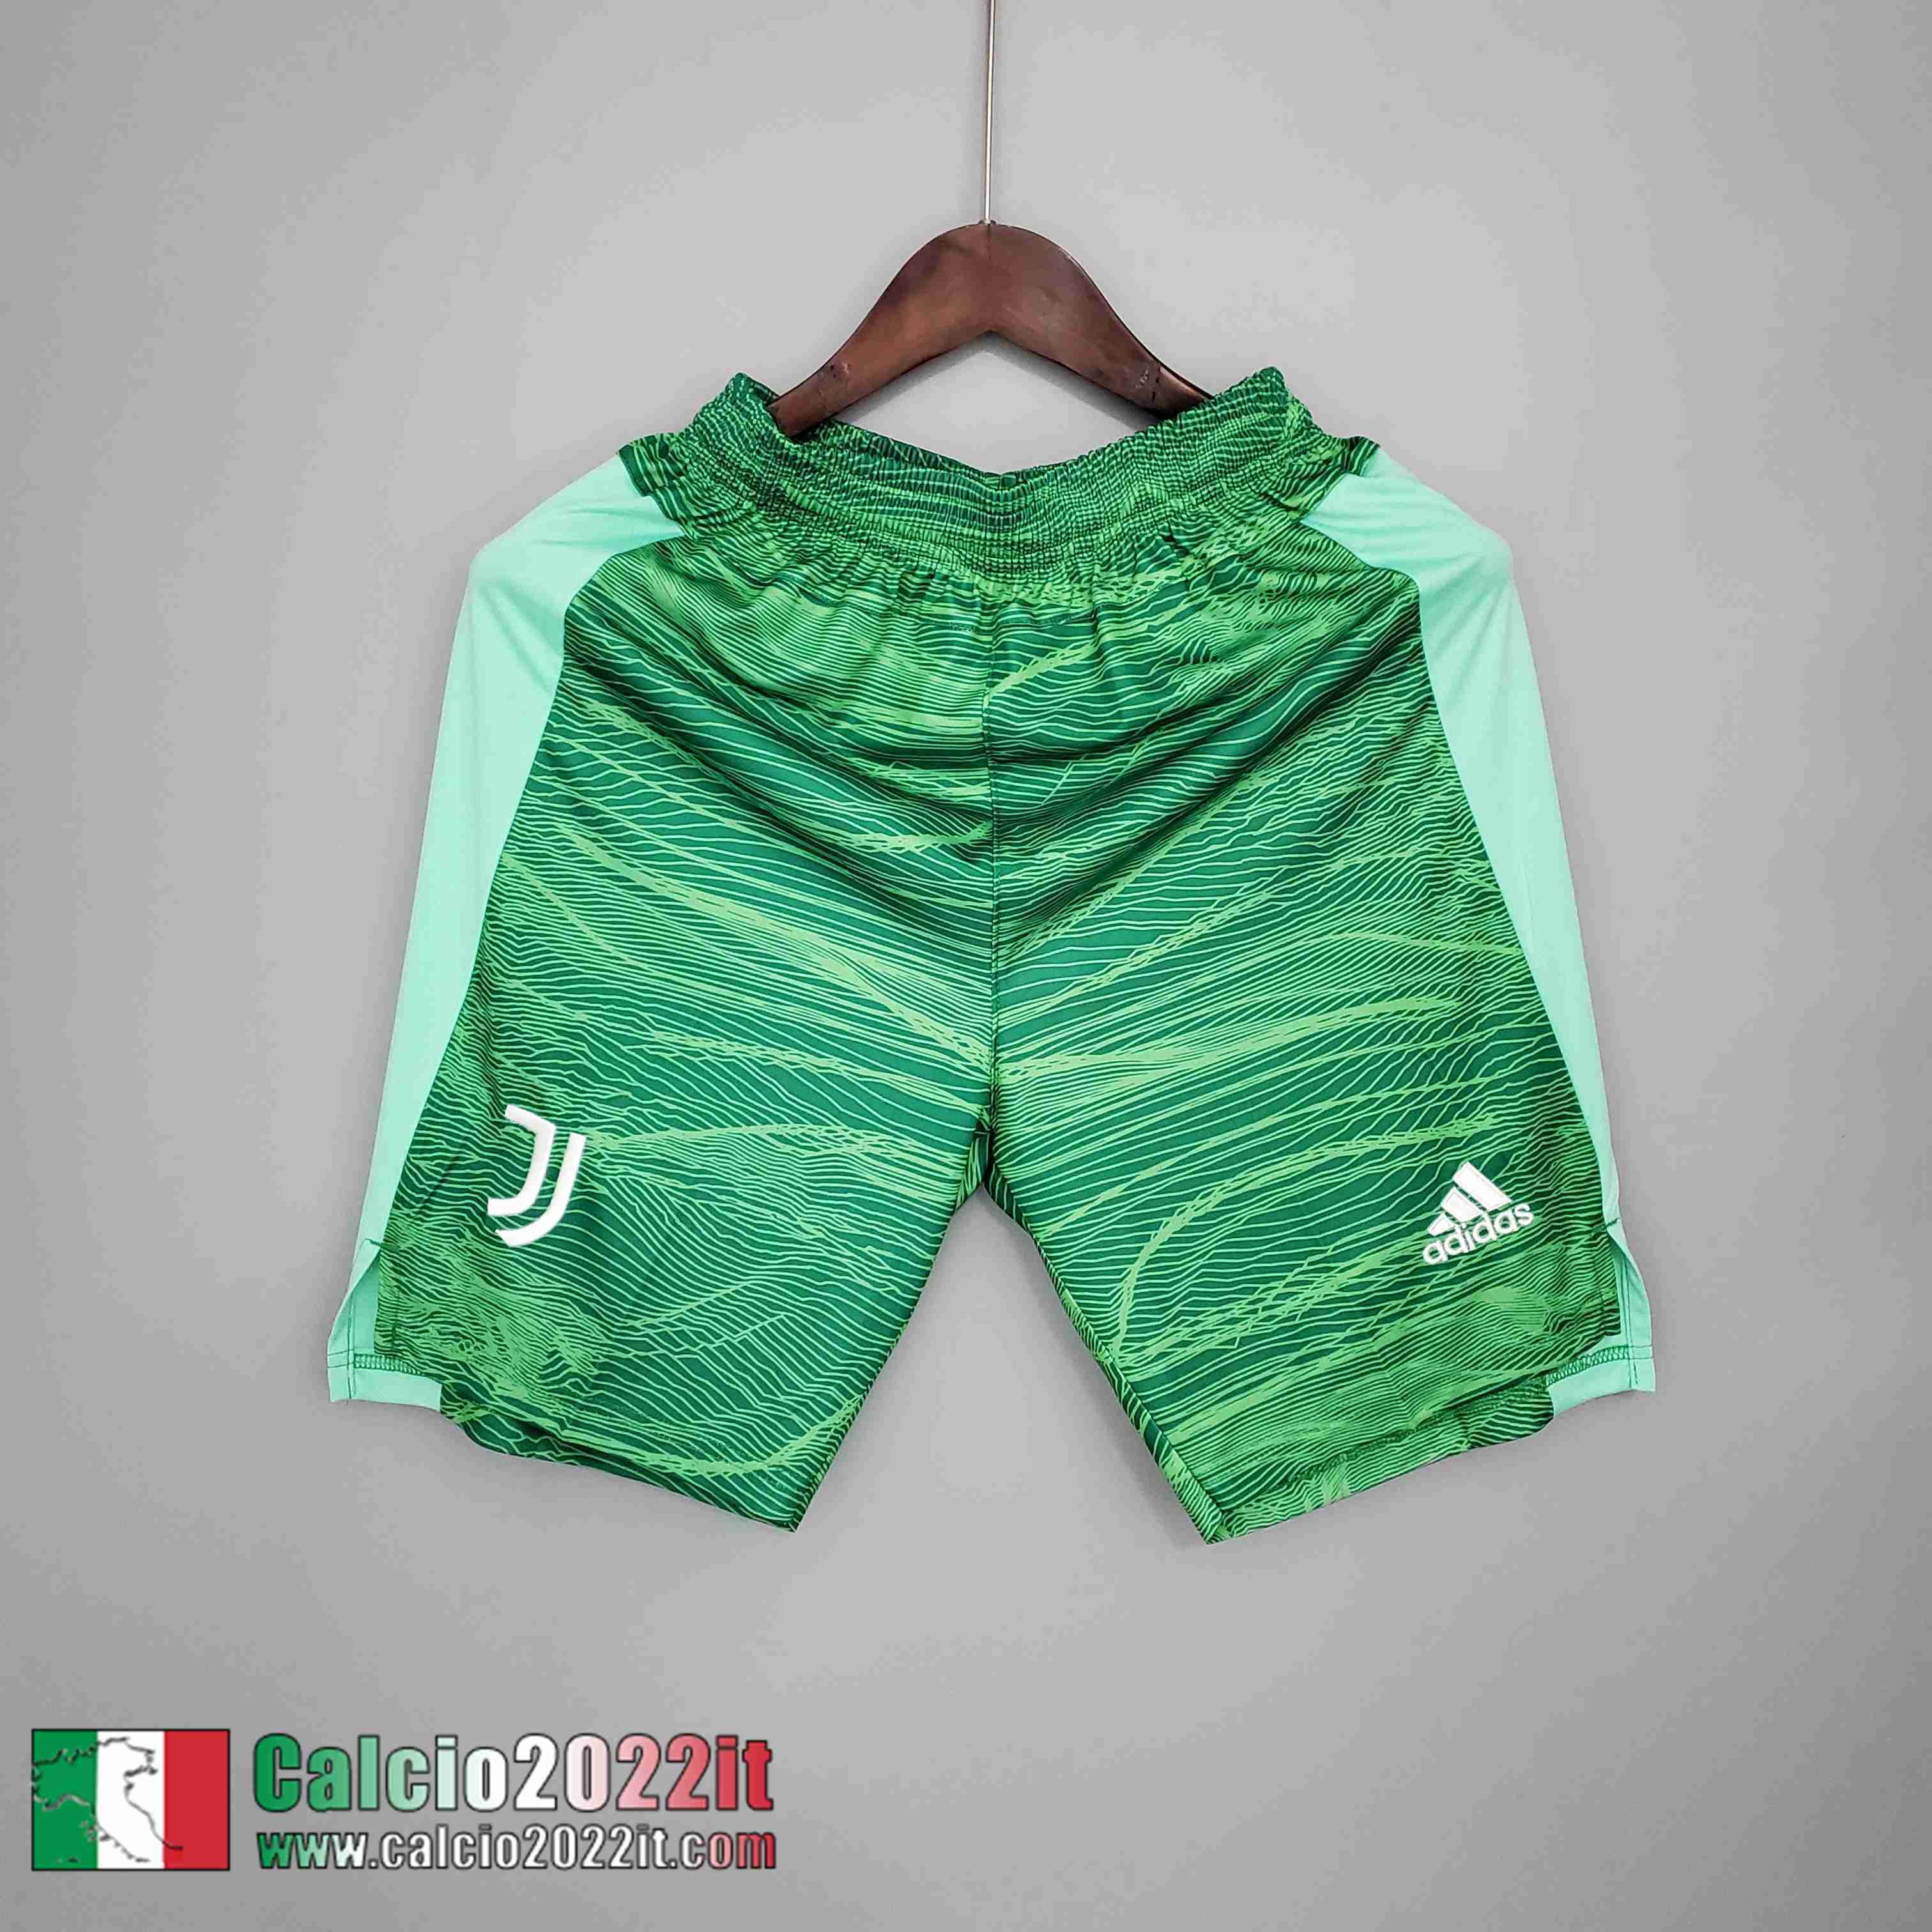 Juventus Pantaloncini Calcio Uomo verde DK26 2021 2022